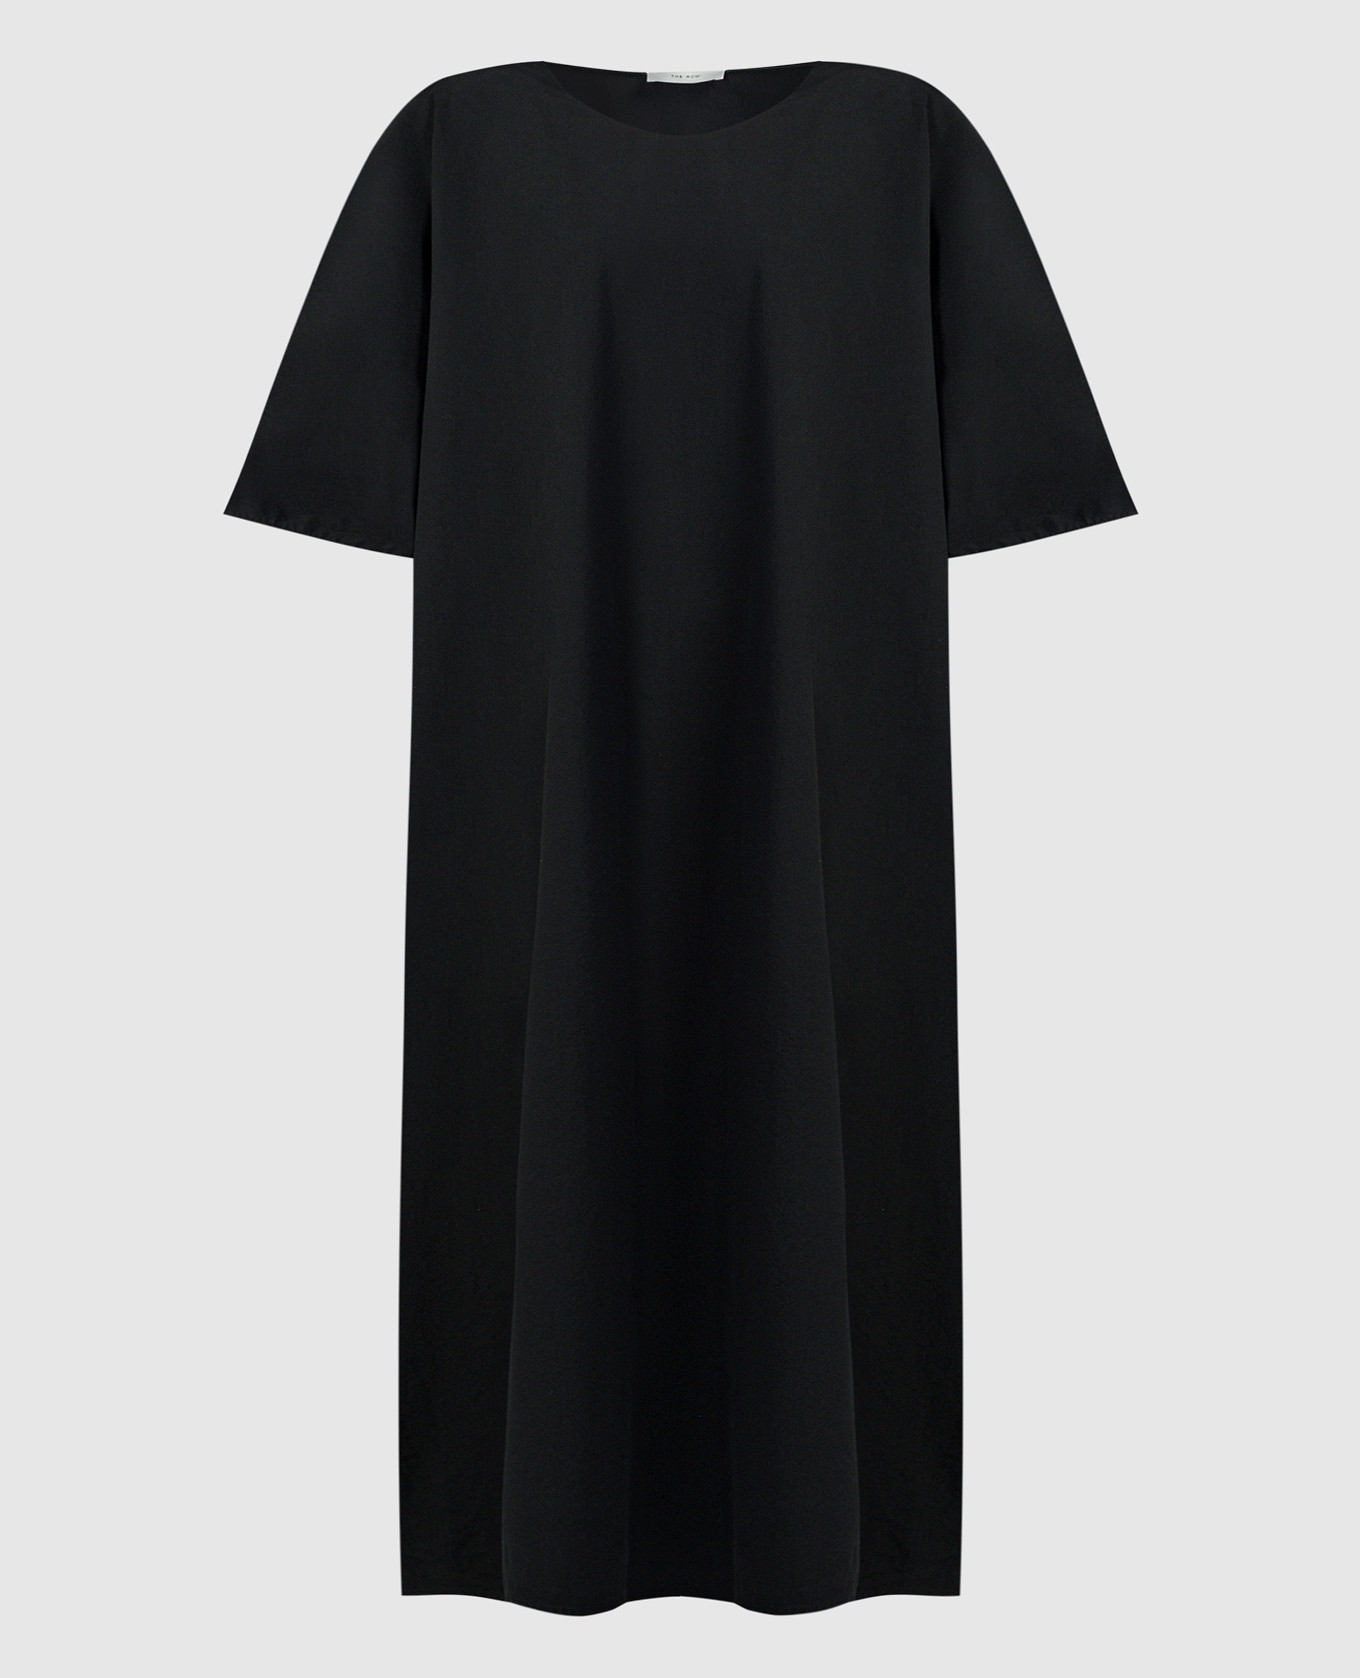 Isora black dress